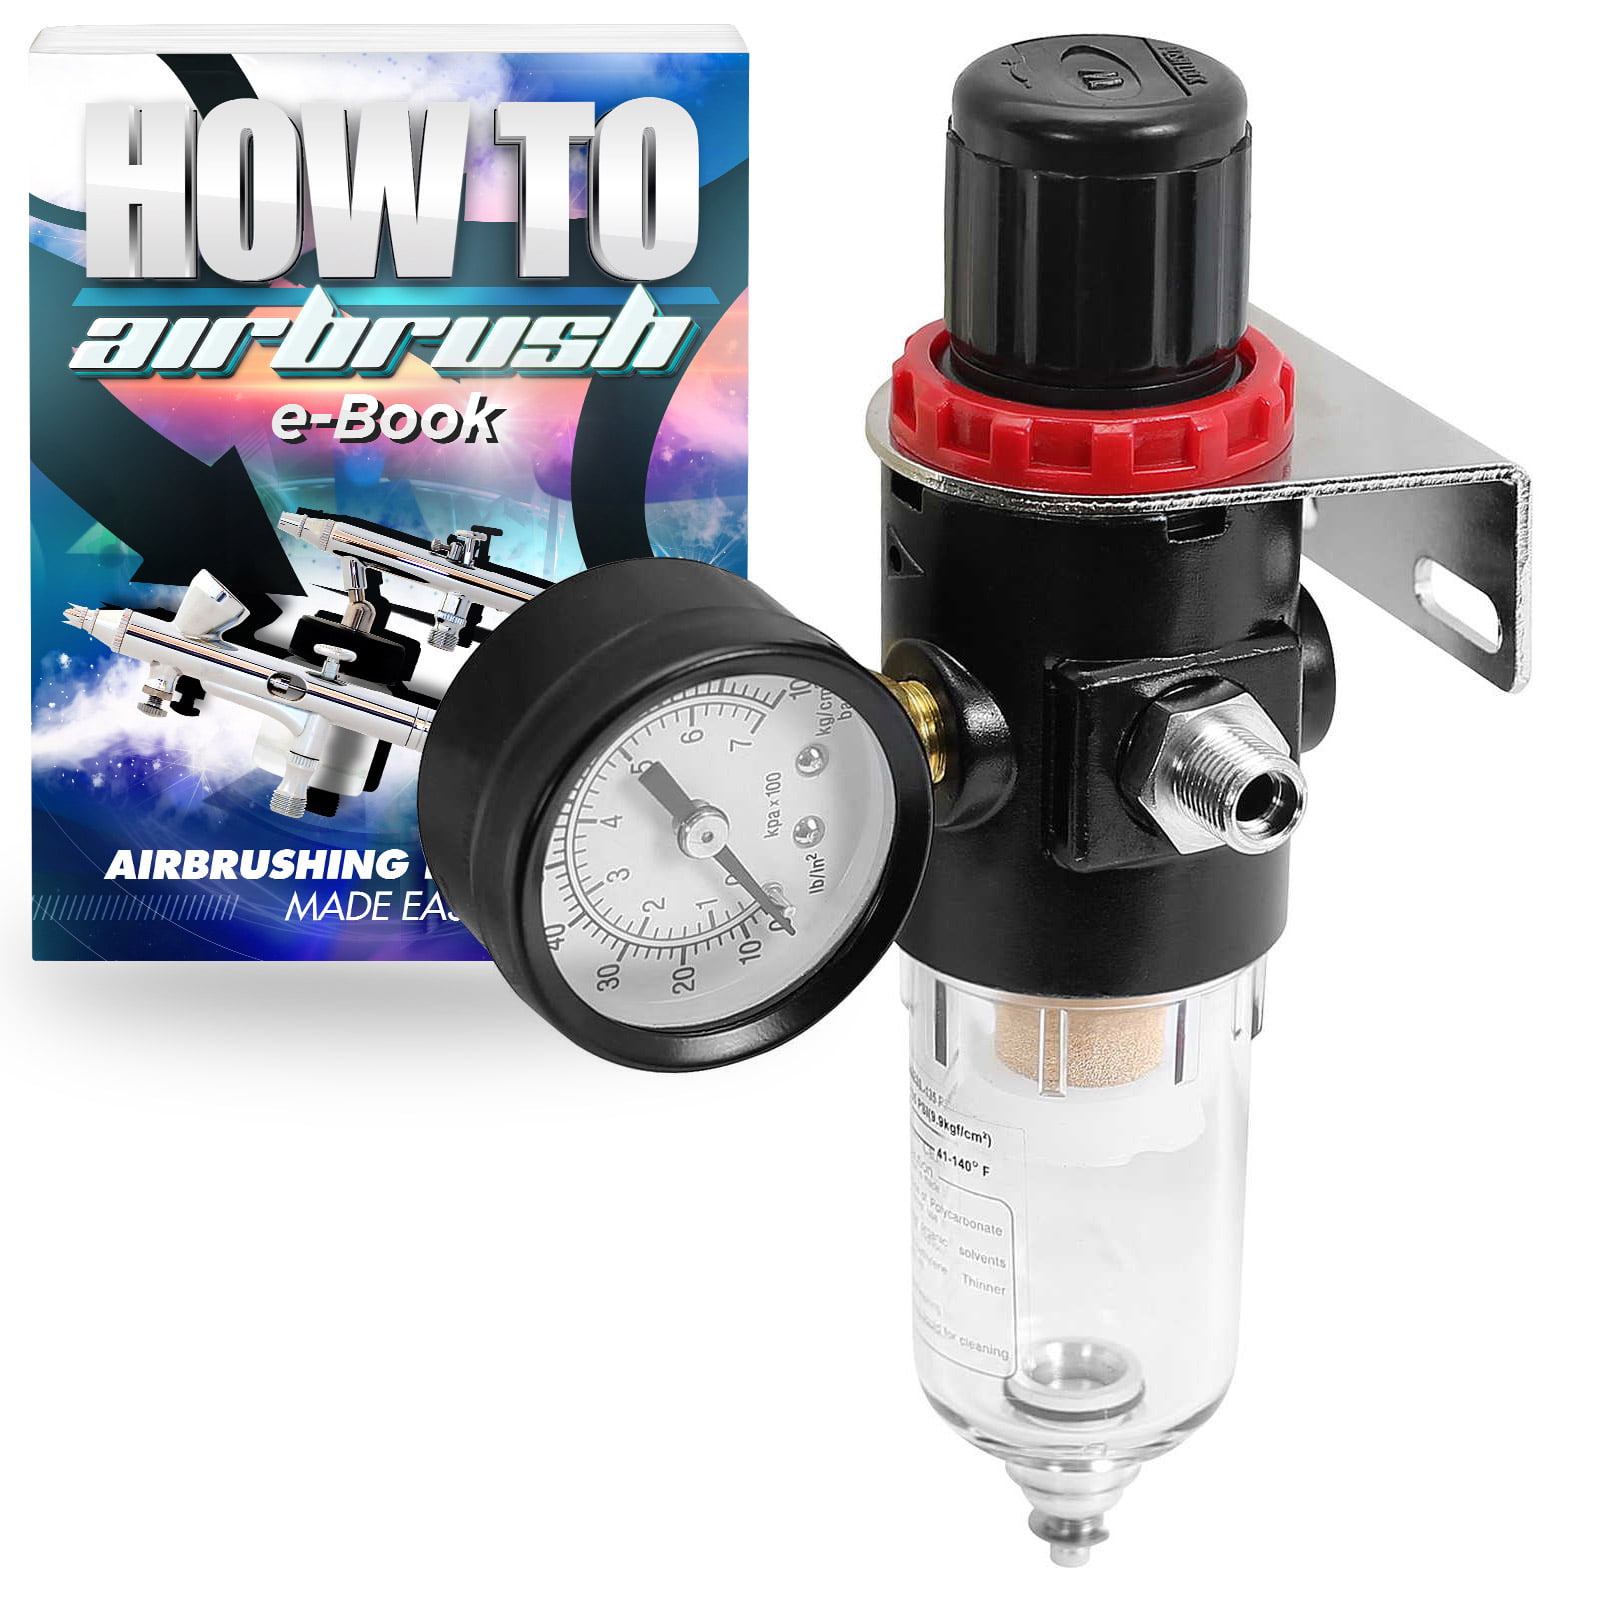 Airbrush Compressor Regulator Air Pressure Control w/ Gauge Water Trap Filter 